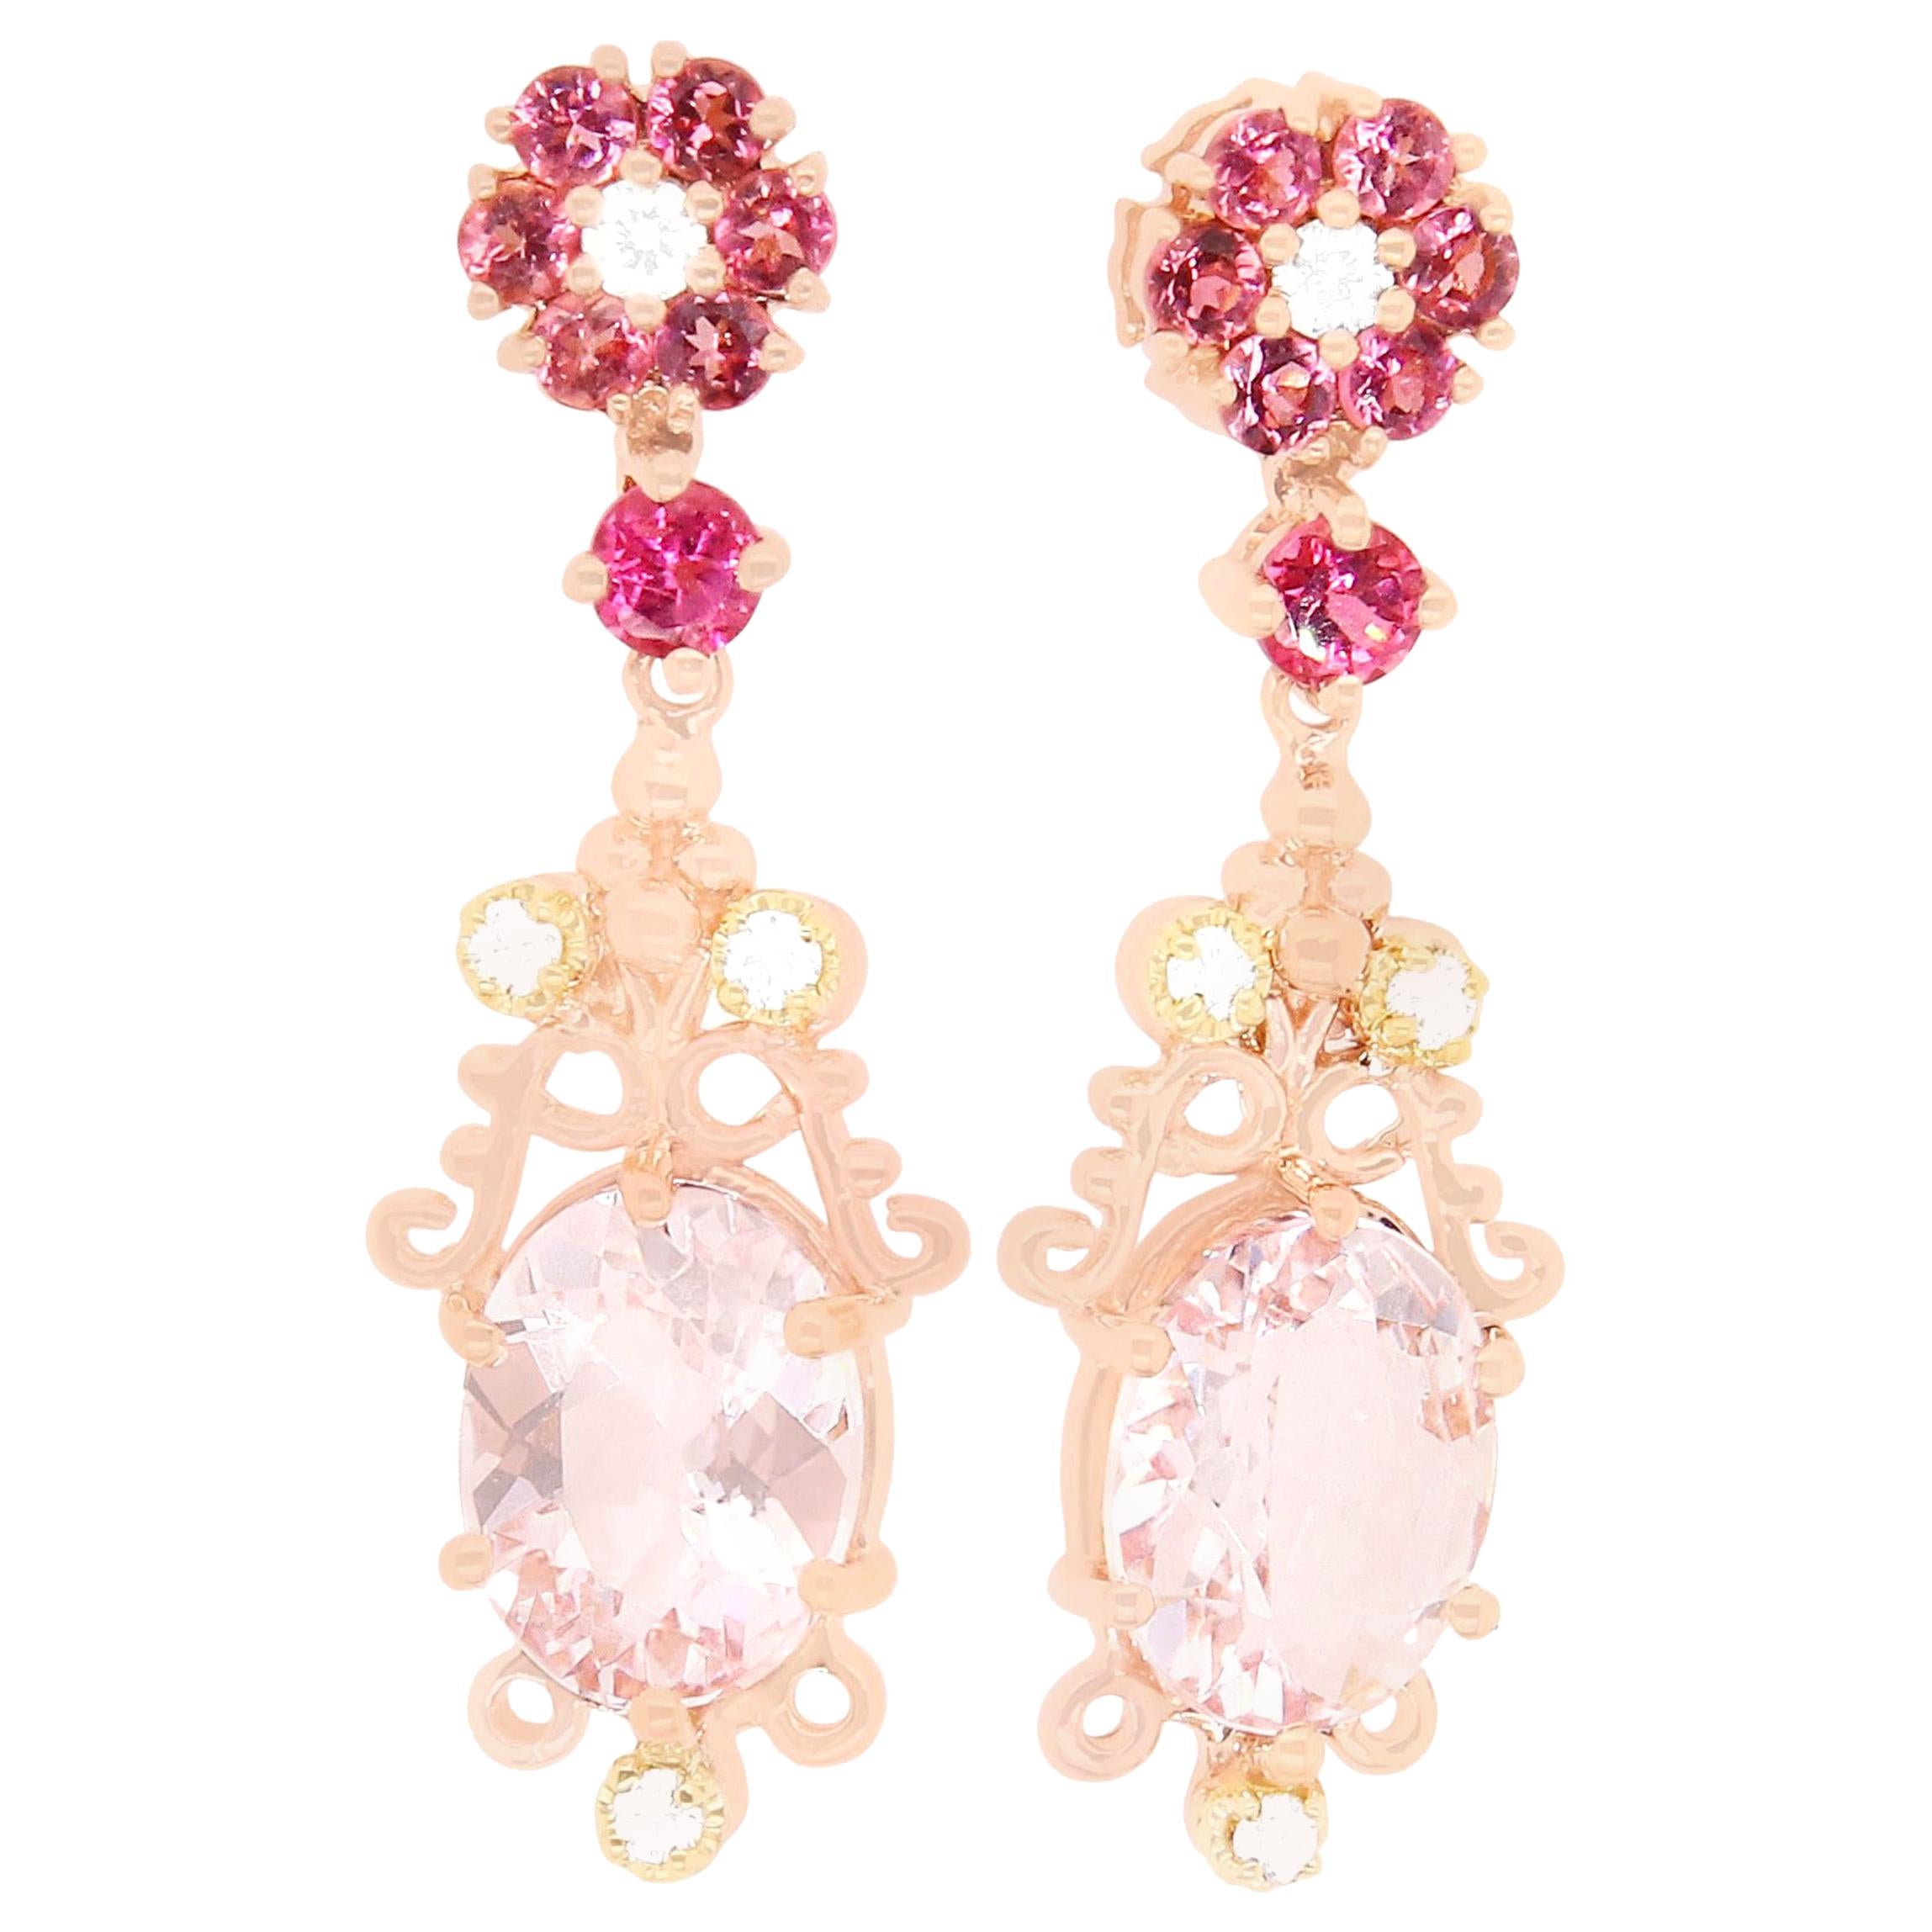 3.01 Carat Oval Pink Morganite Pink Tourmaline Diamond Earrings in 14K Rose Gold For Sale